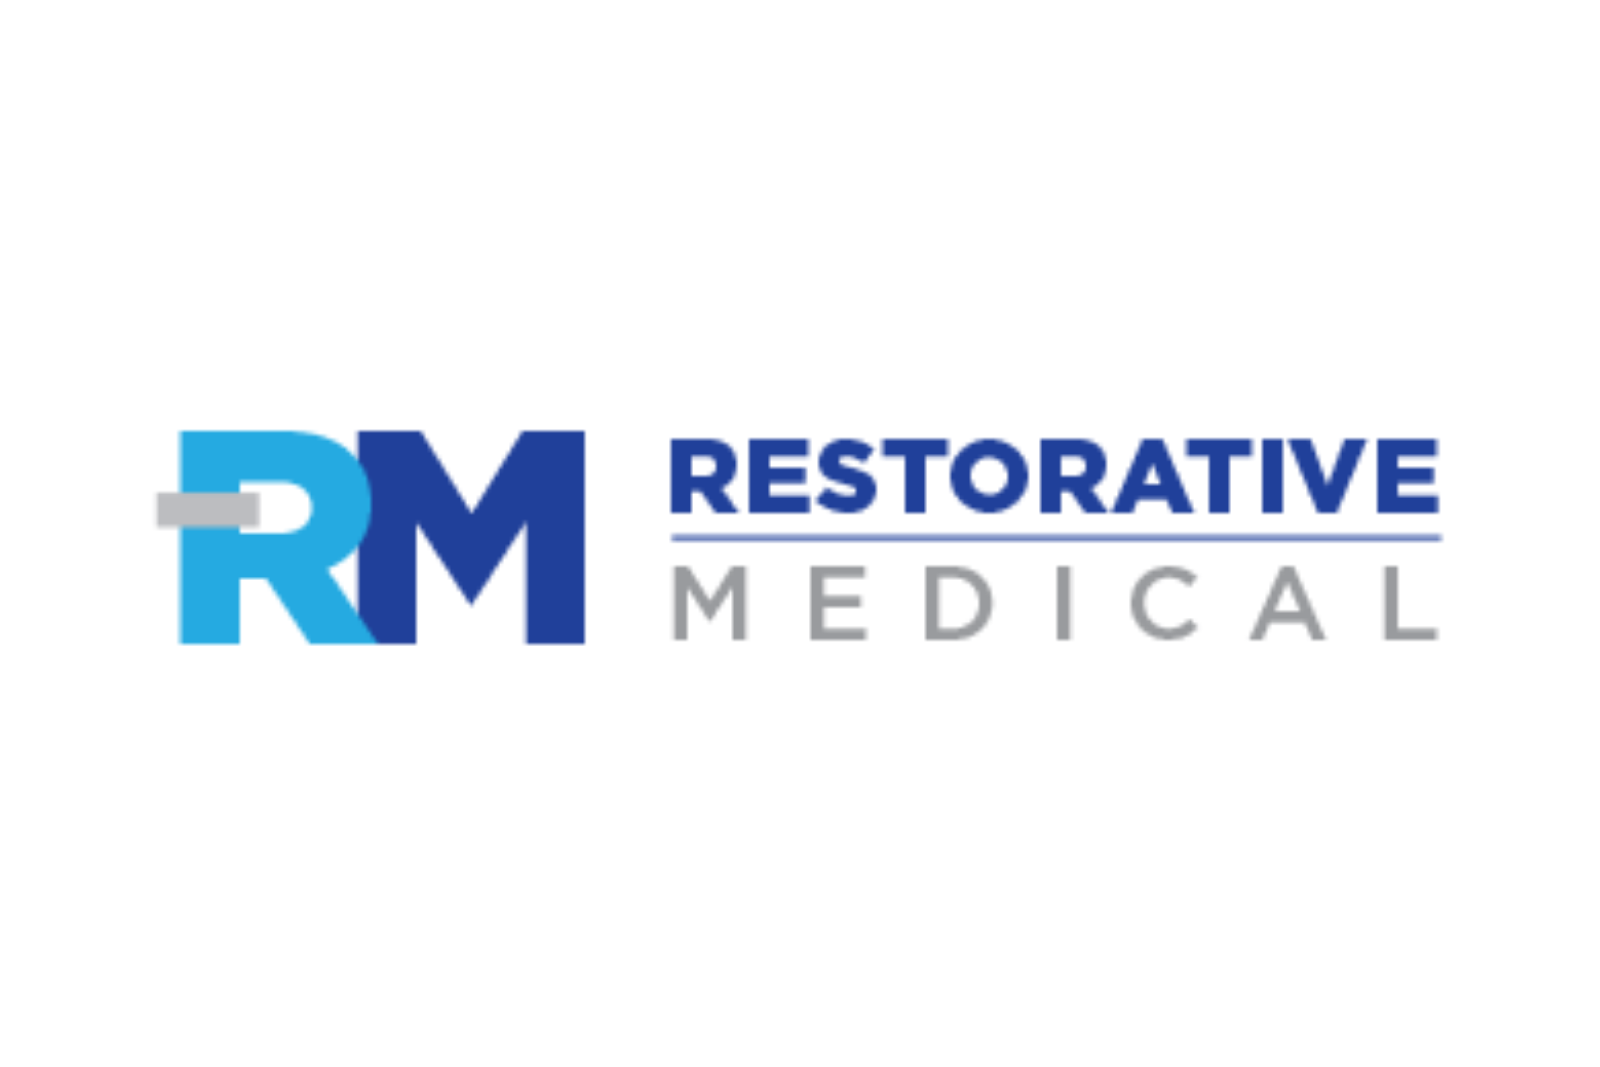 RM - Restorative Medical 